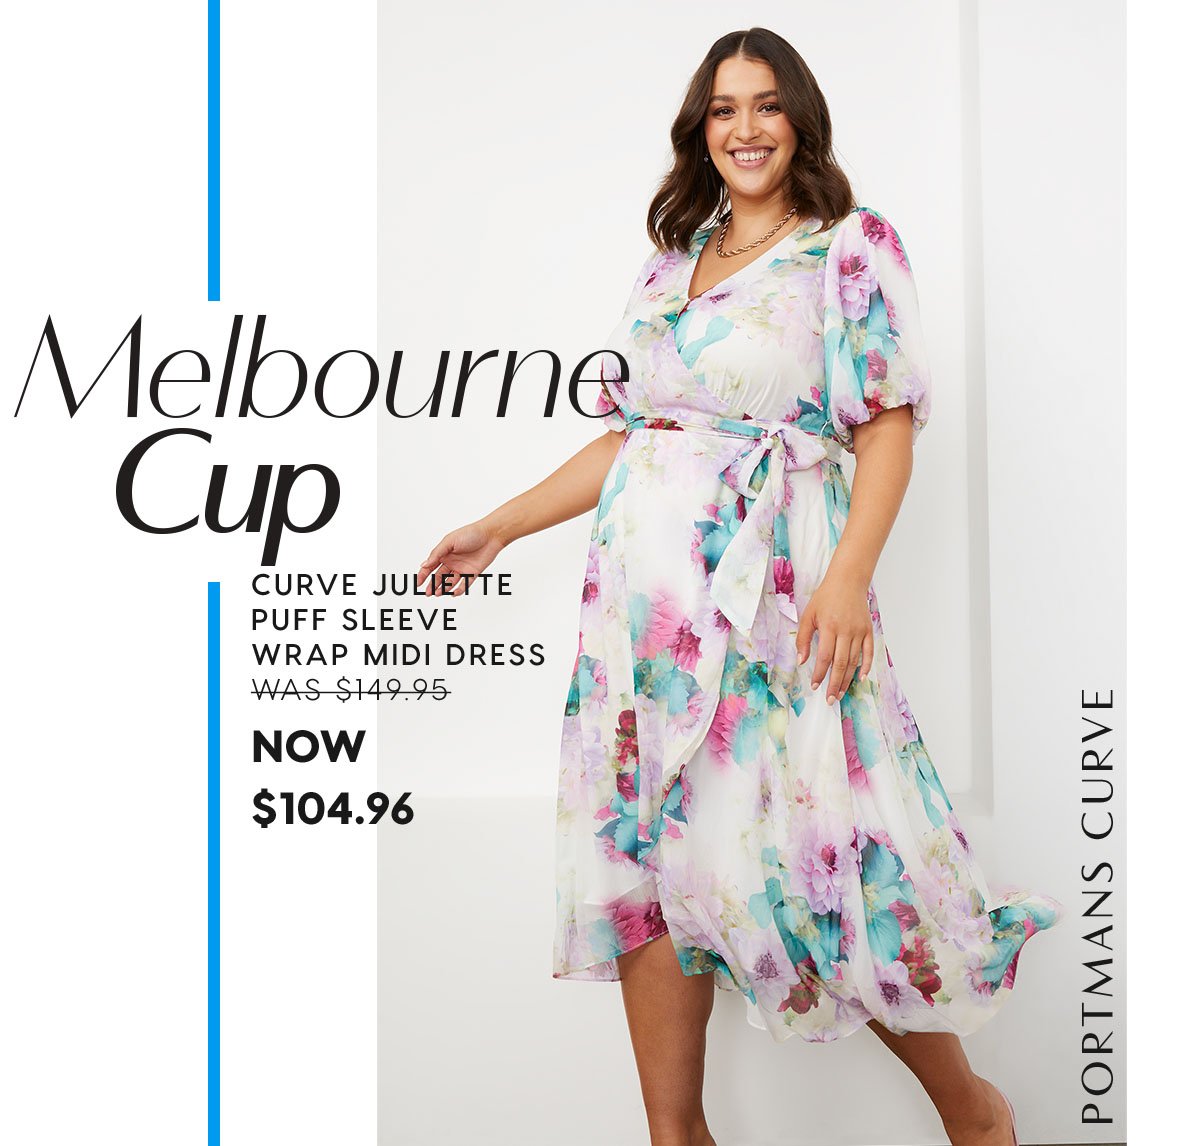 Melbourne Cup. Curve Juliette Puff Sleeve Wrap Midi Dress WAS $149.95 NOW $104.96